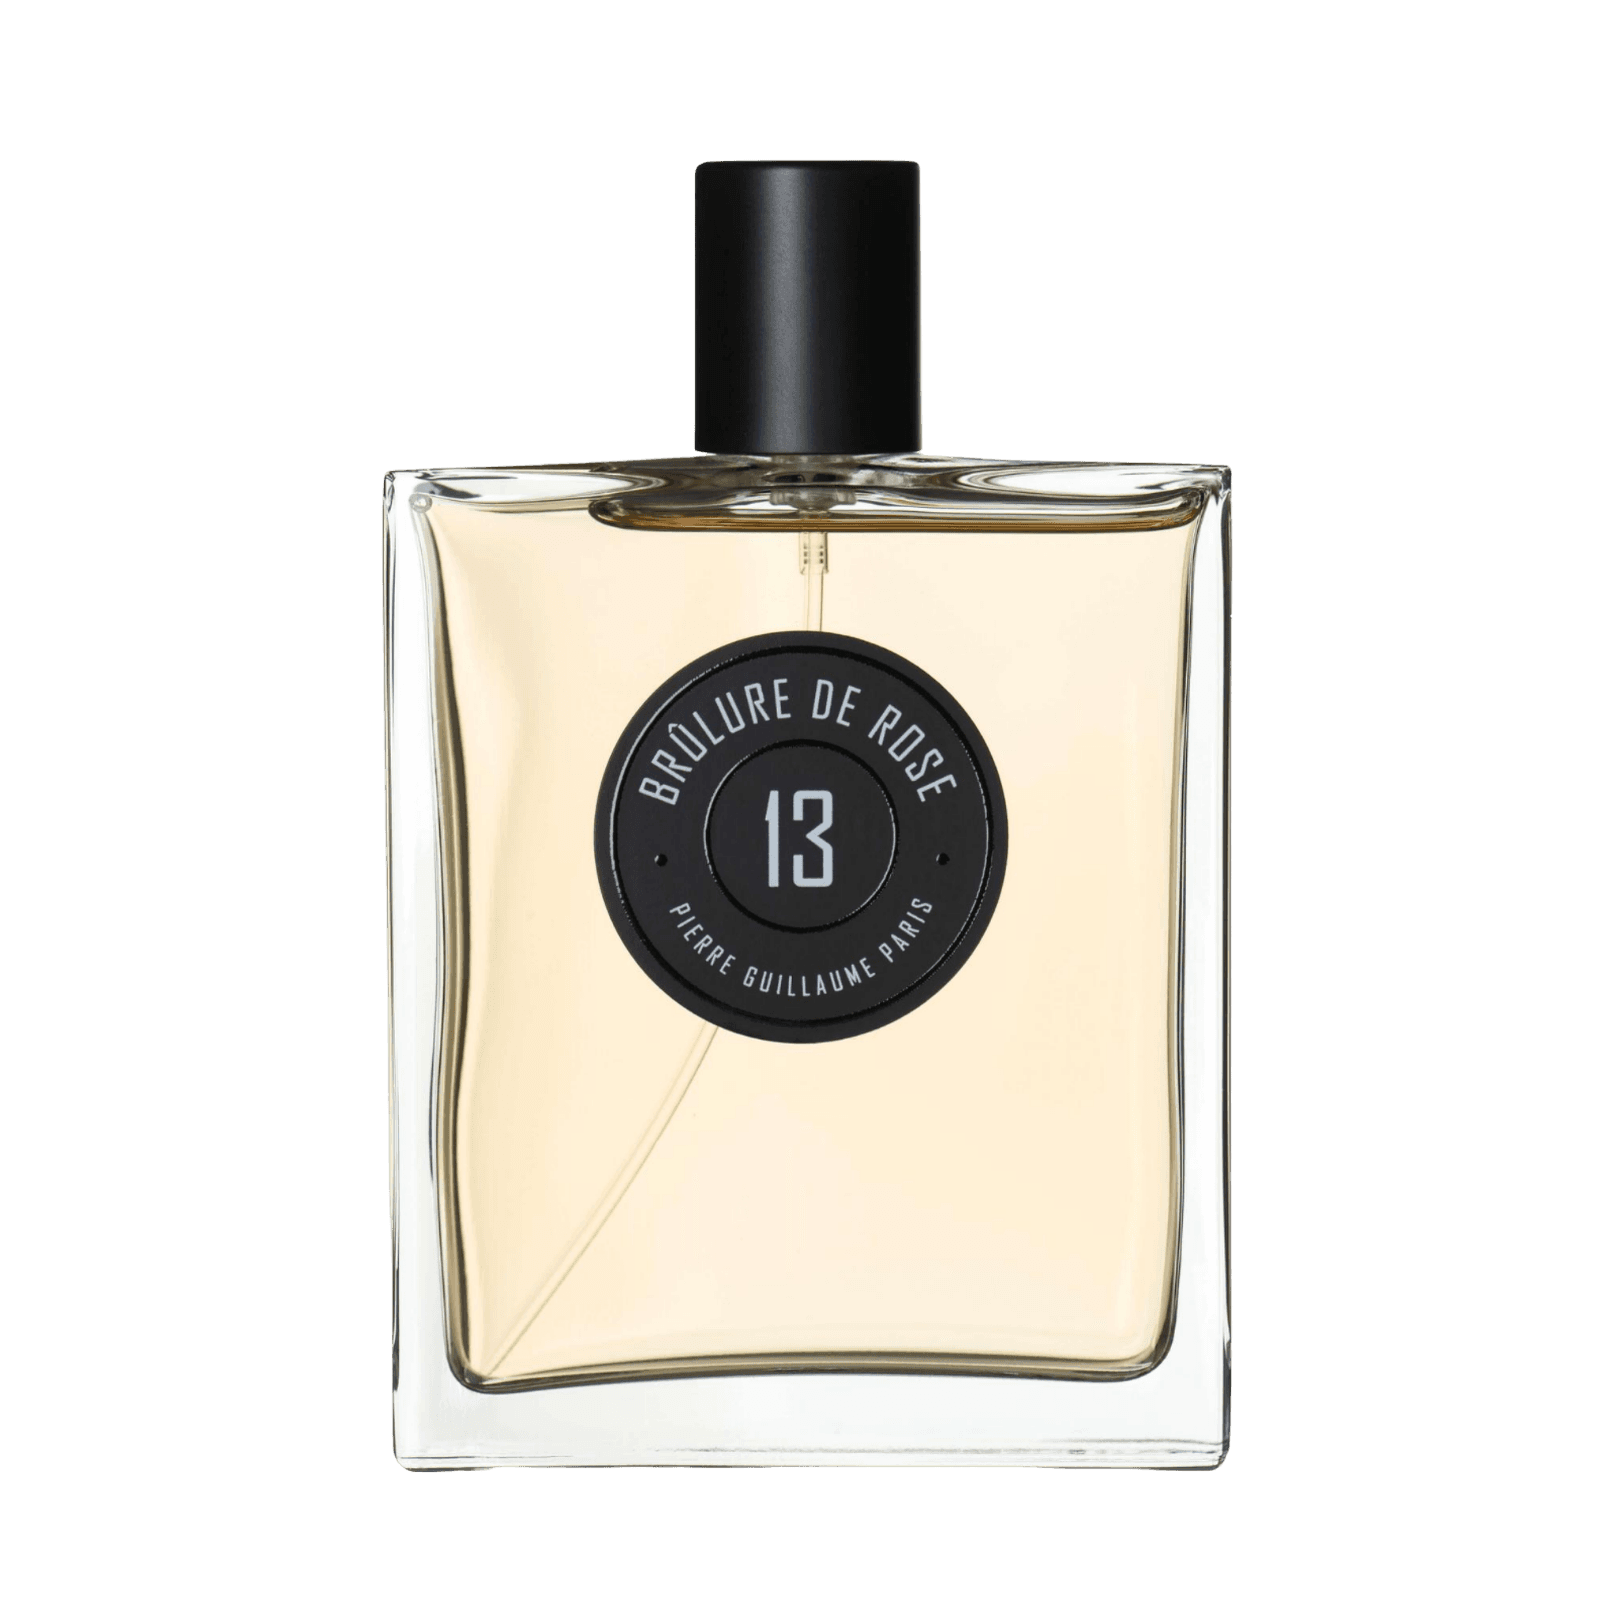 Pierre Guillaume - 13 BRULURE DE ROSE | Perfume Lounge